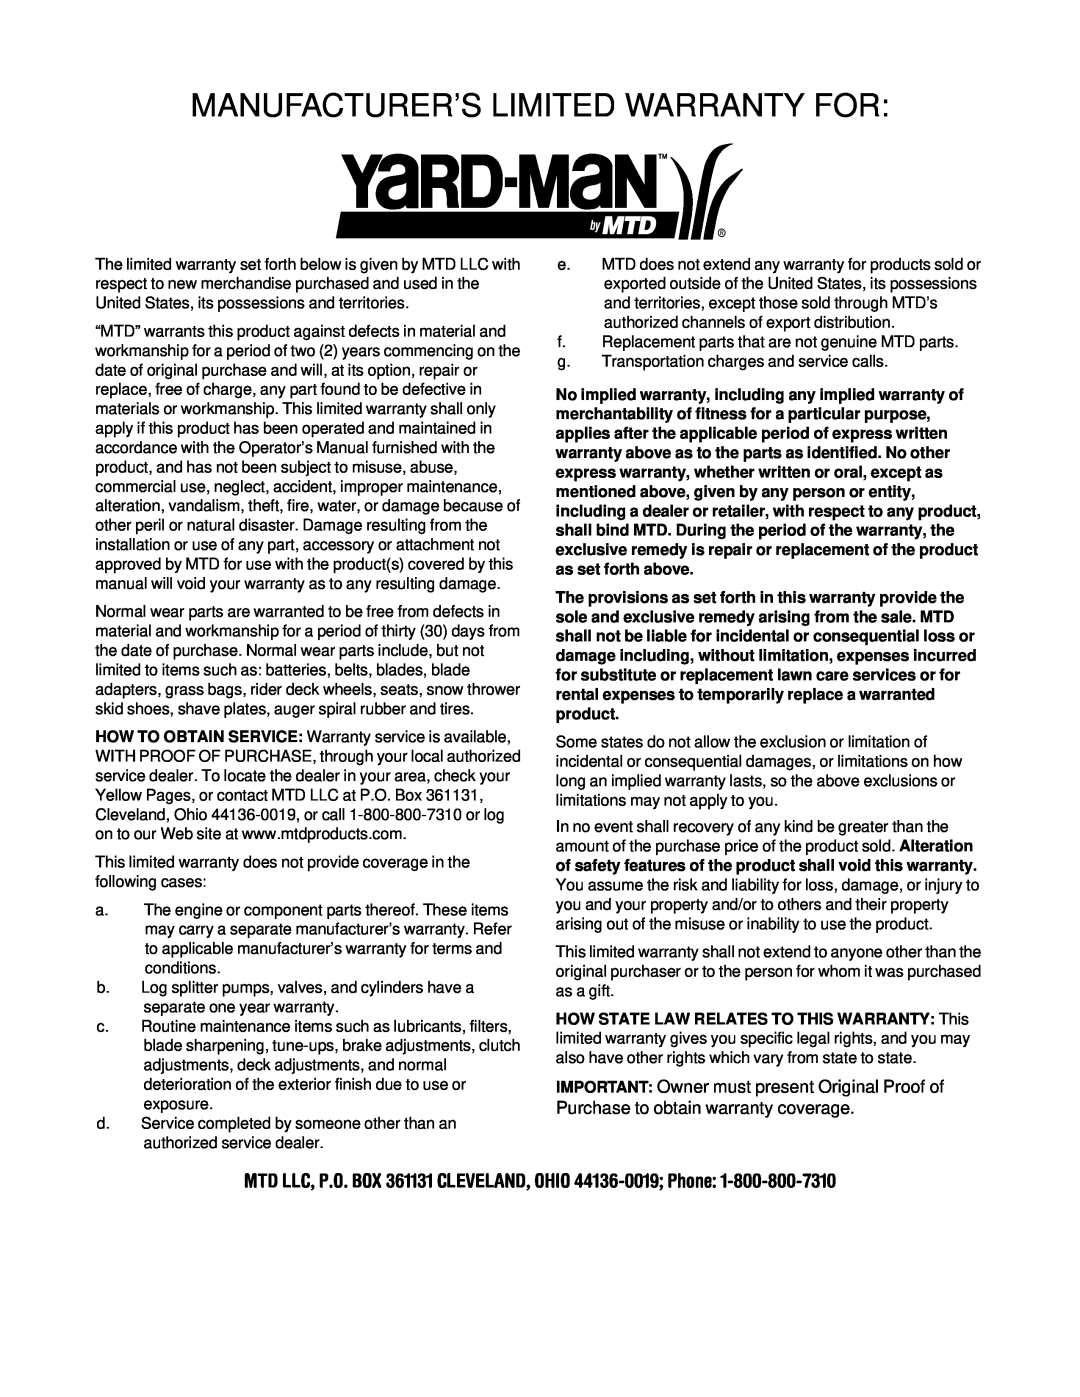 Yard-Man 549 manual Manufacturer’S Limited Warranty For 